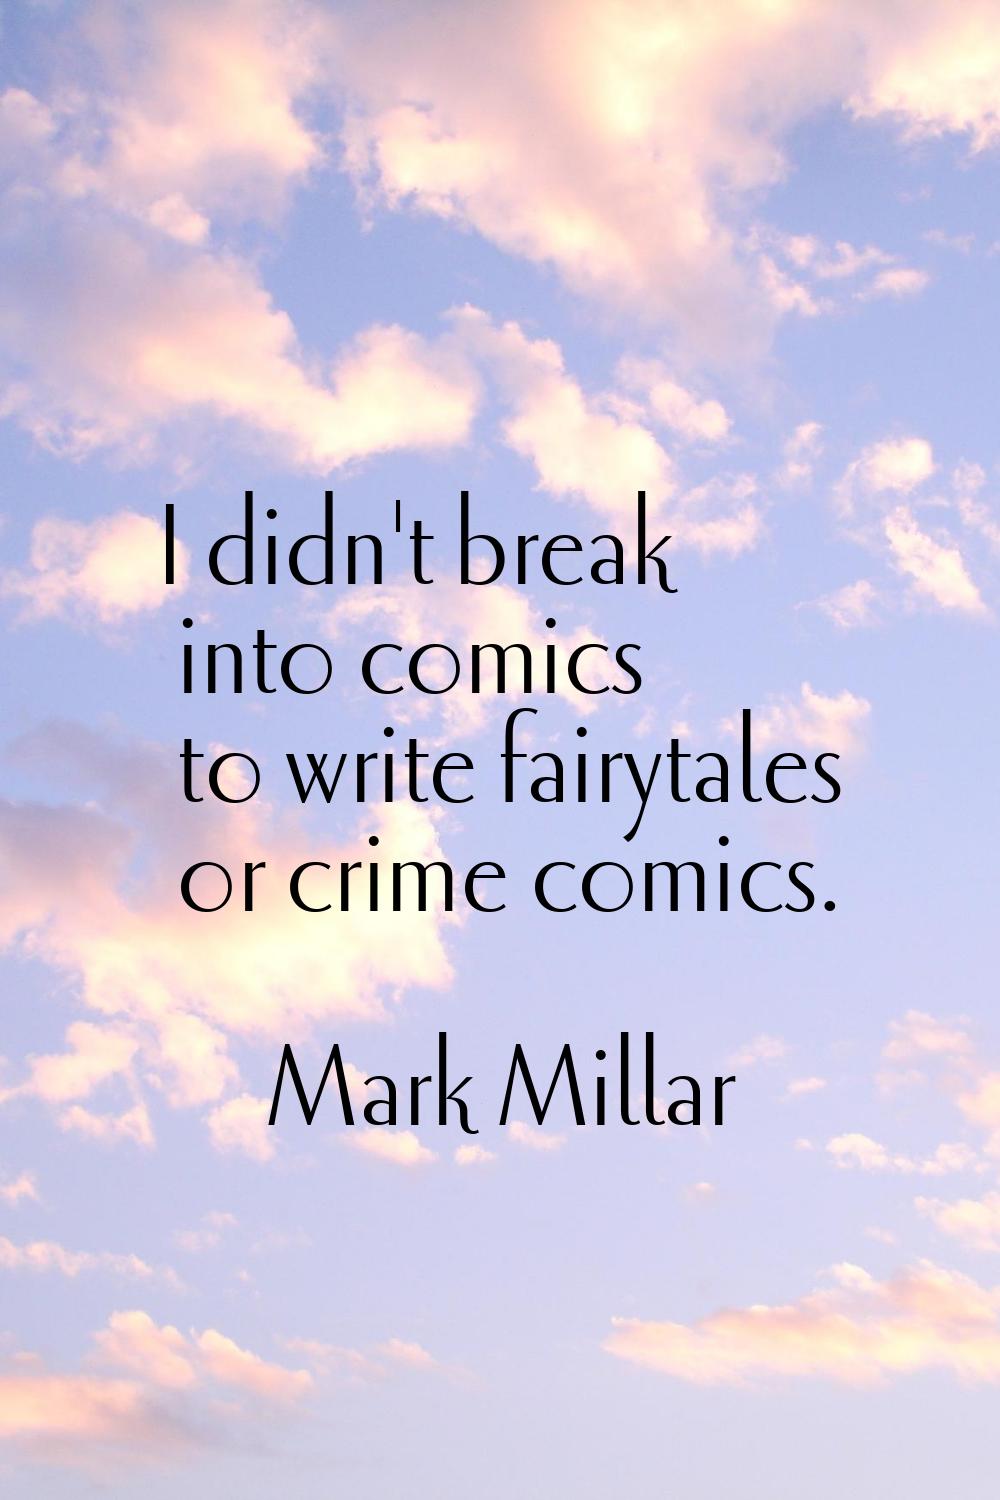 I didn't break into comics to write fairytales or crime comics.